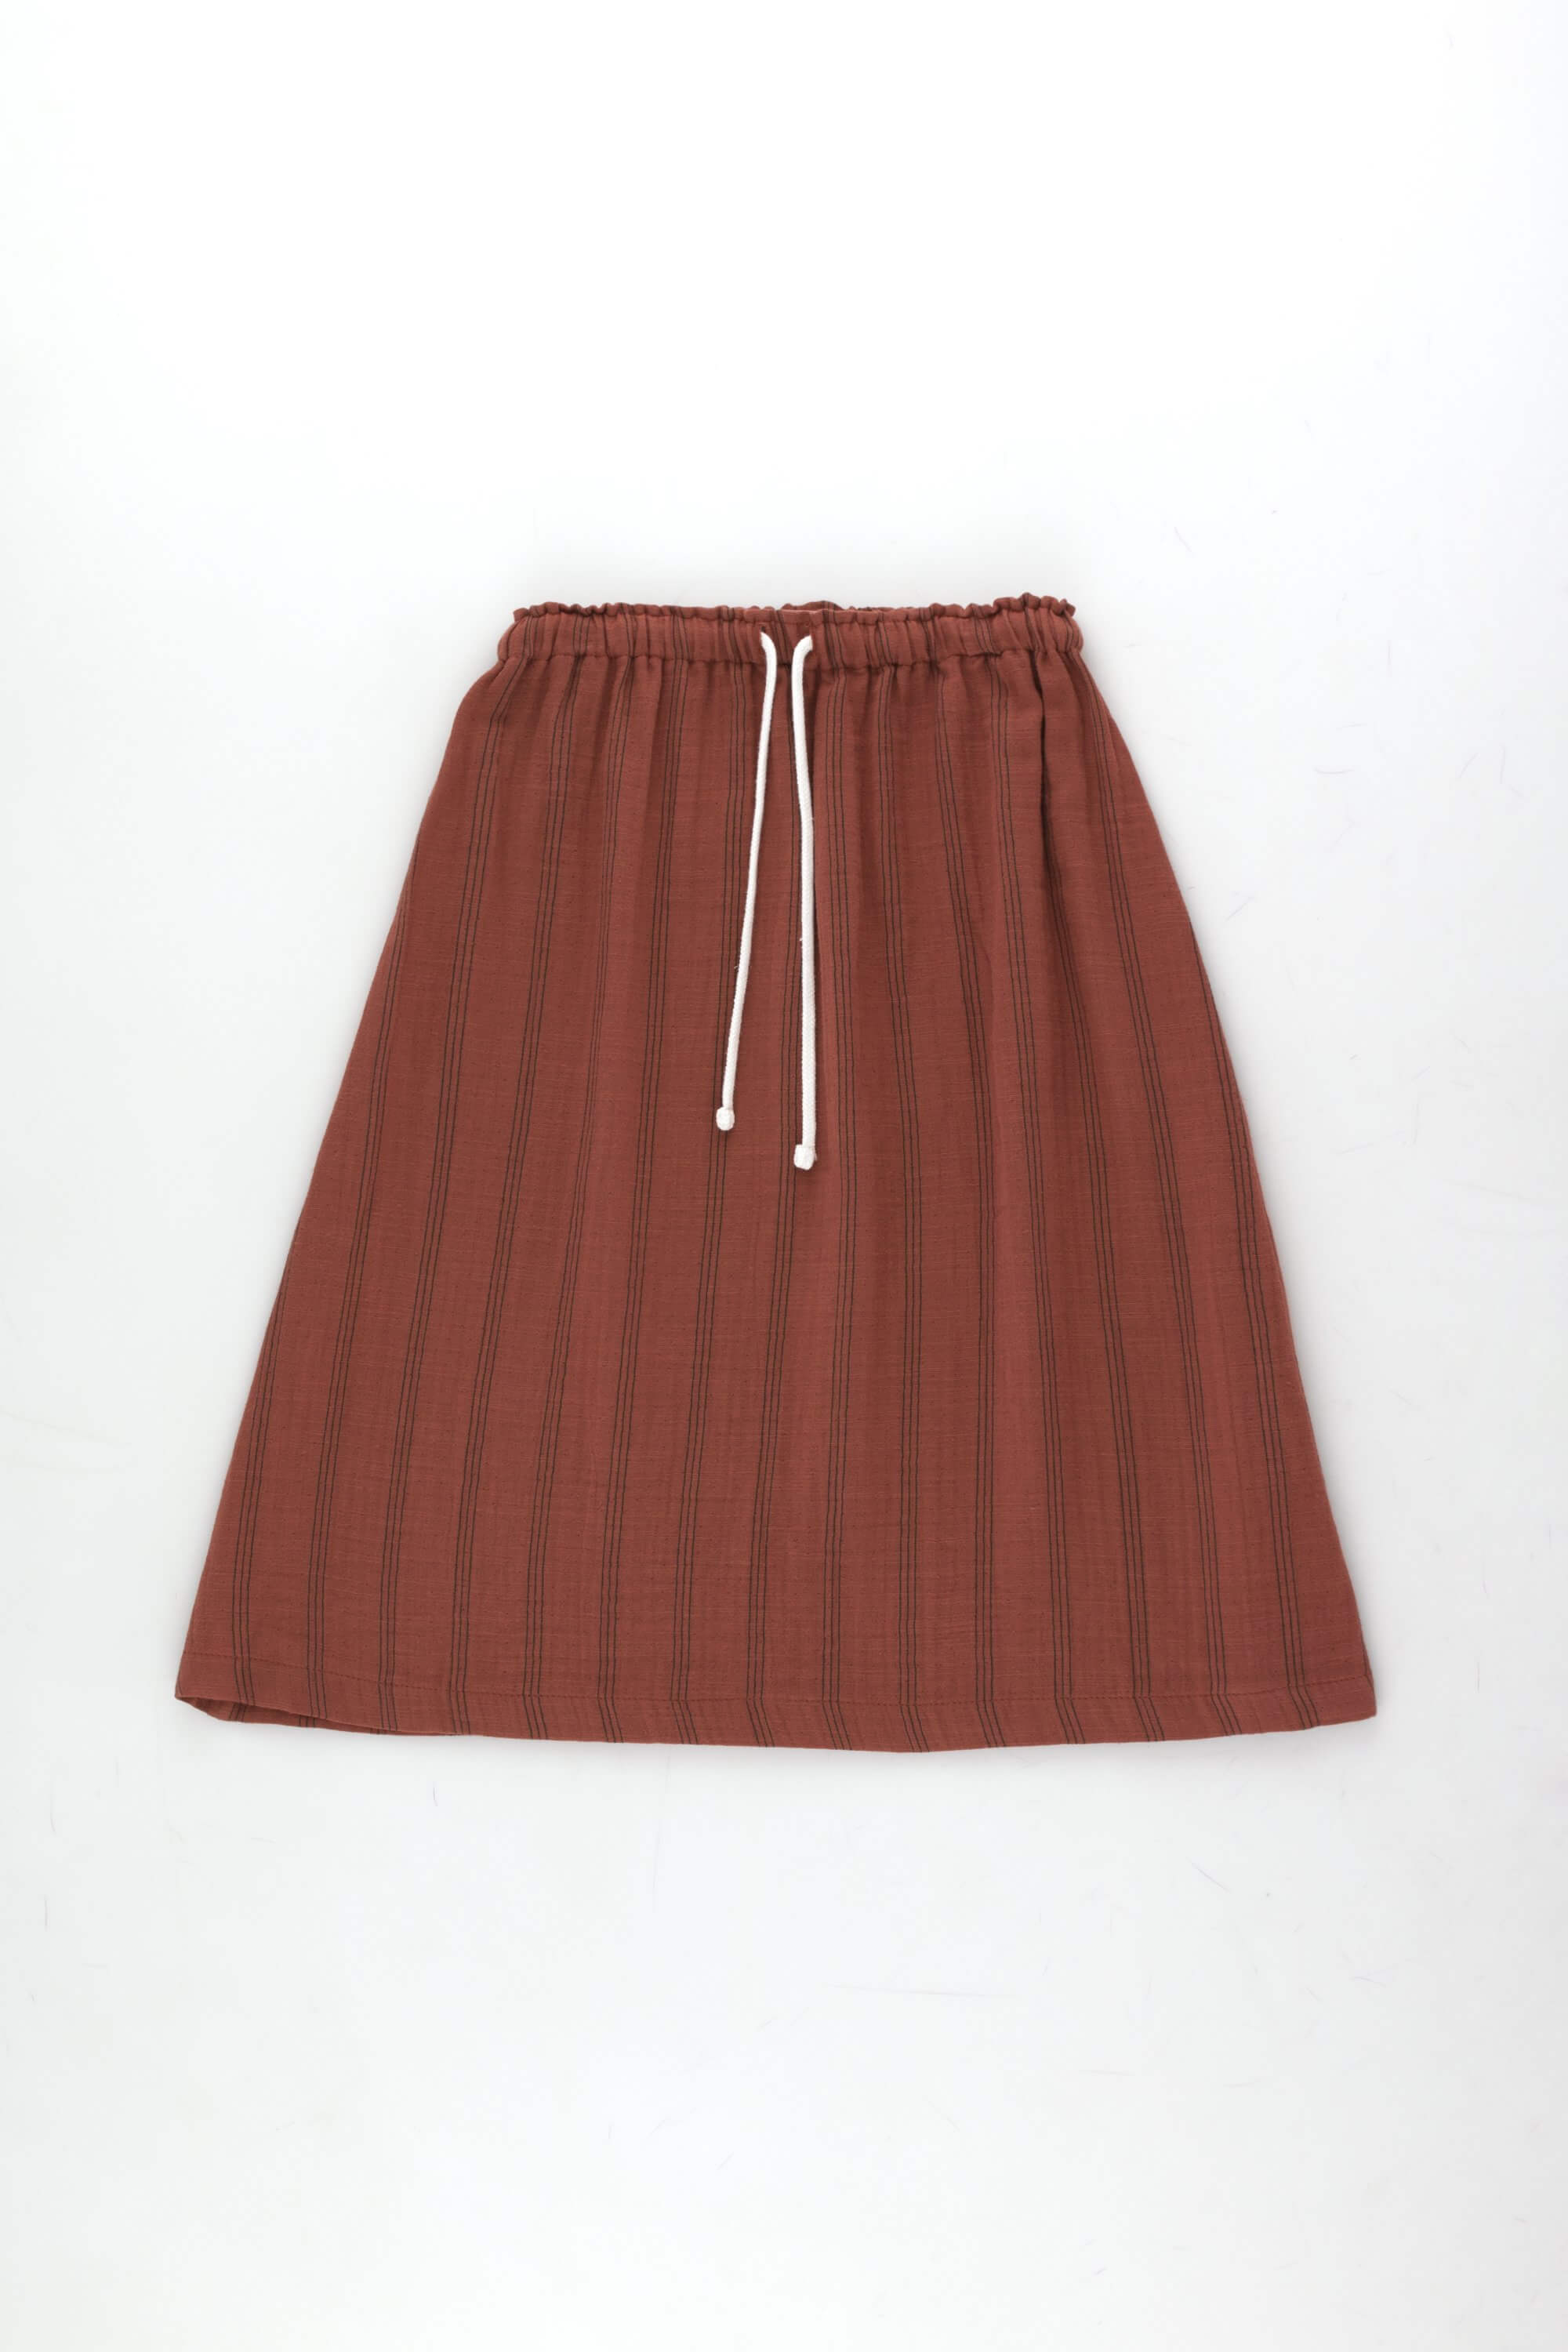 Tinycottons Stripes Long Skirt